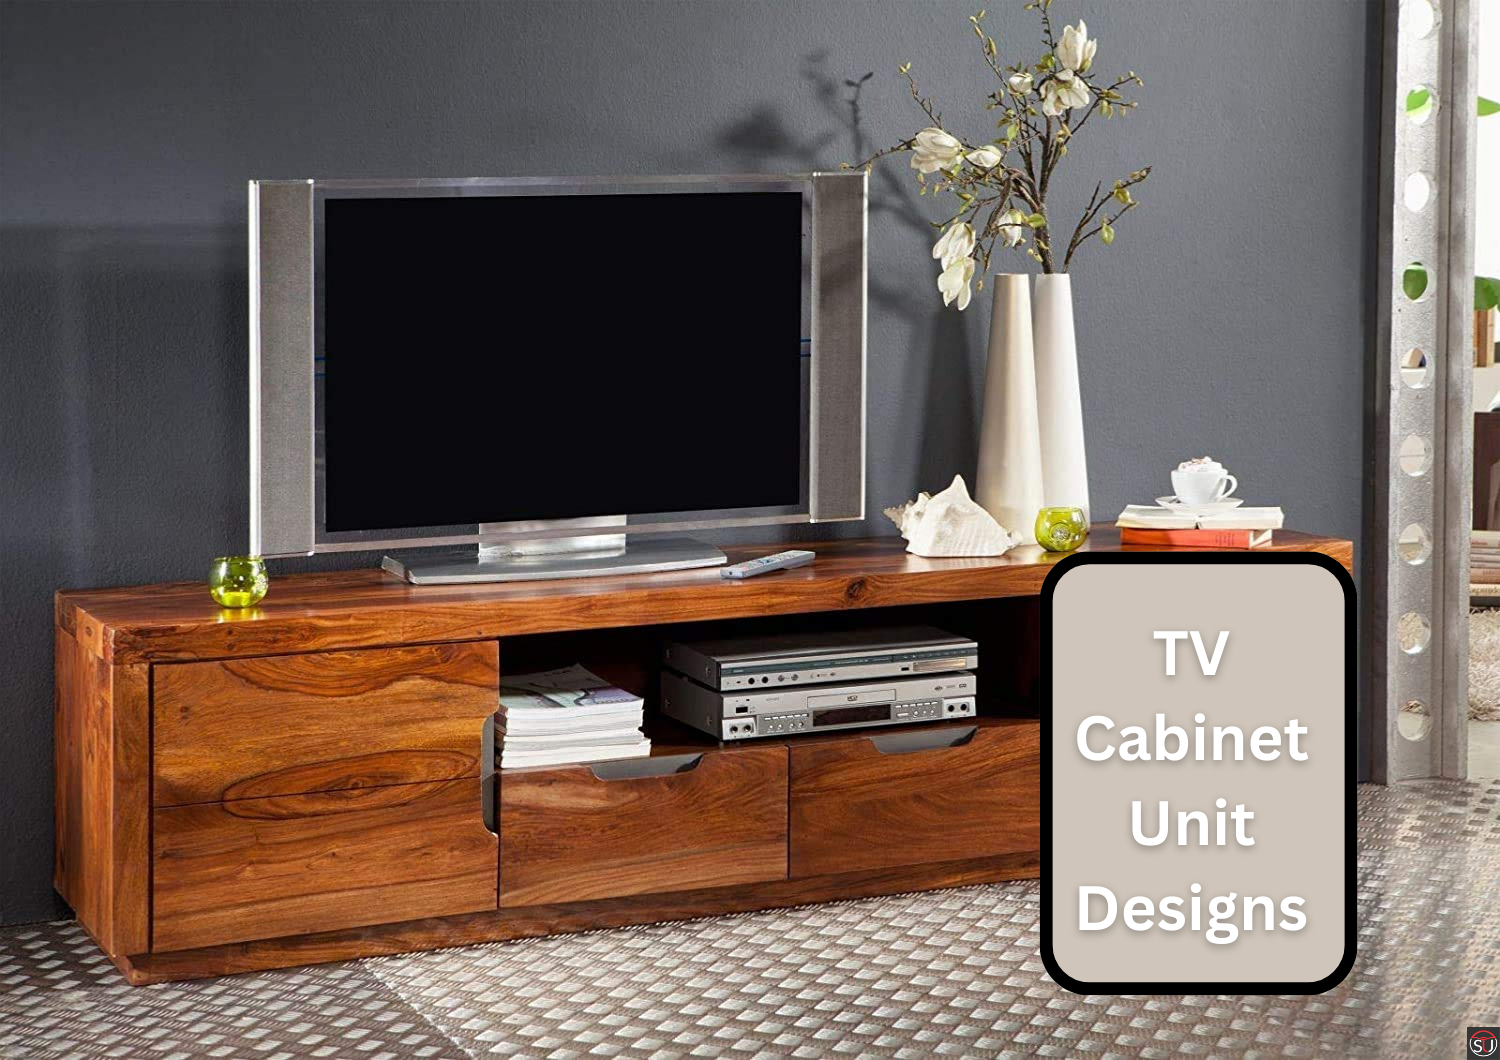 TV Cabinet Unit Designs